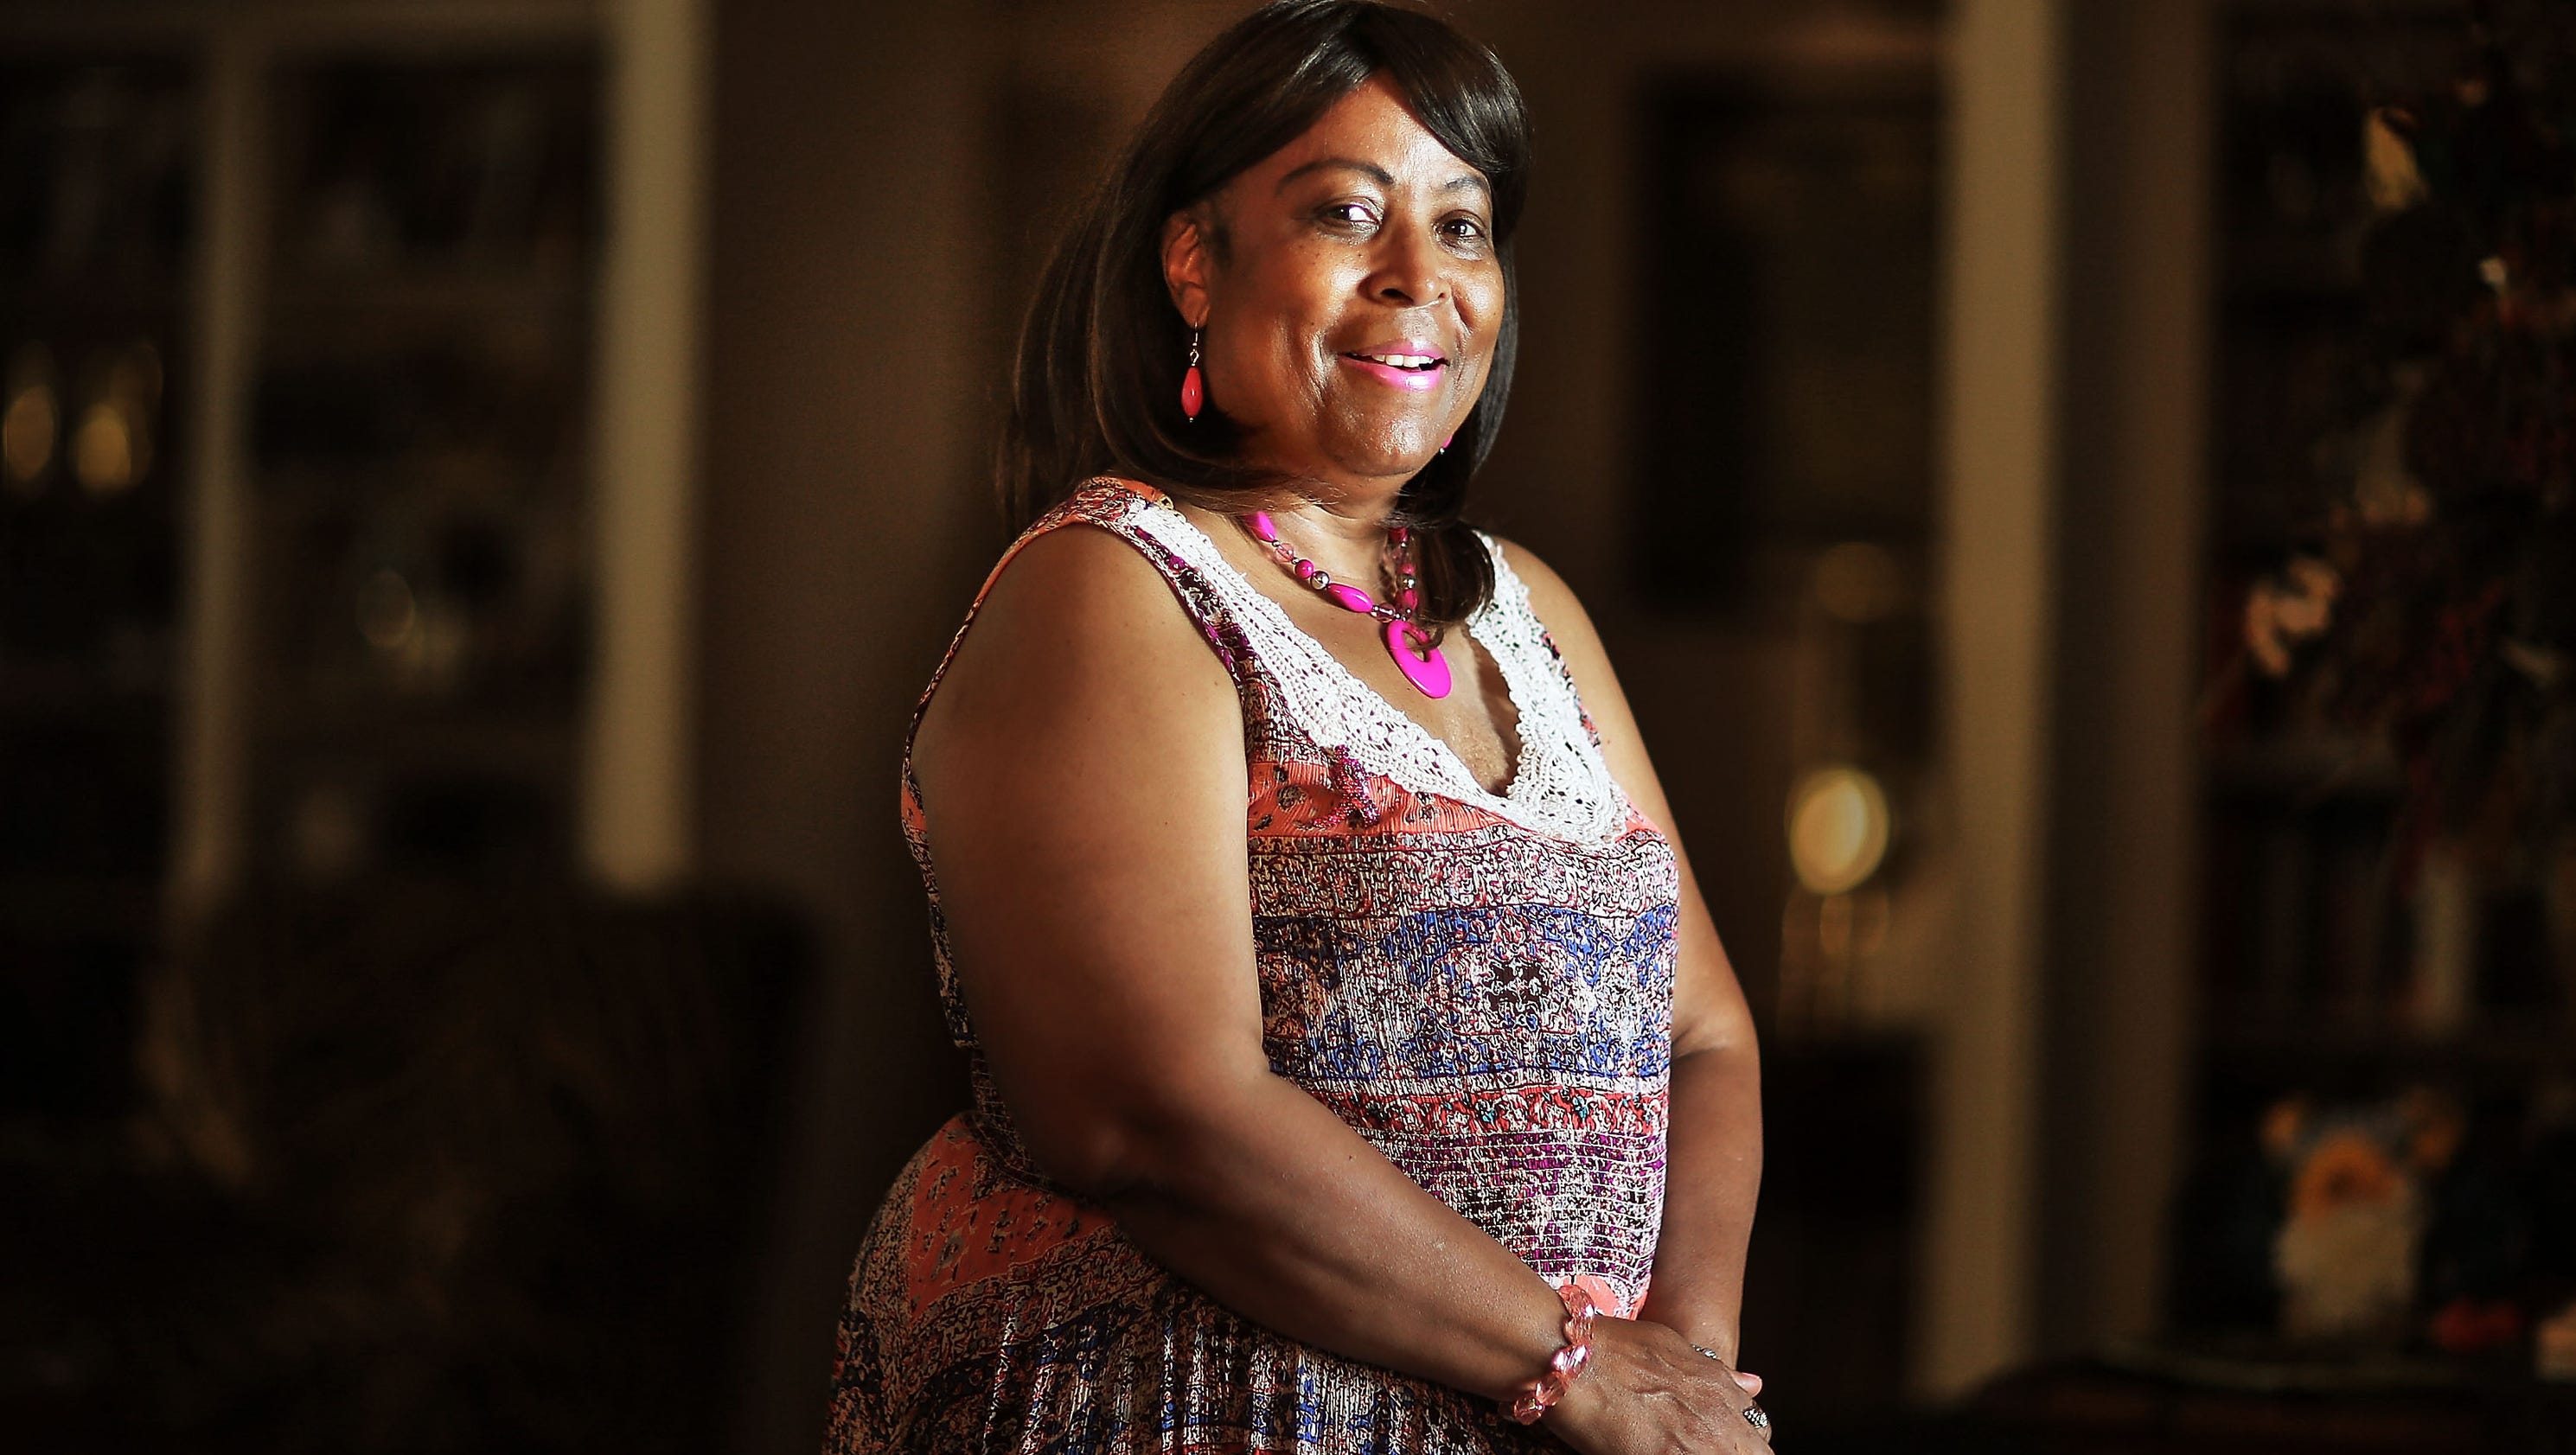 Memphis reducing racial disparity in breast cancer deaths